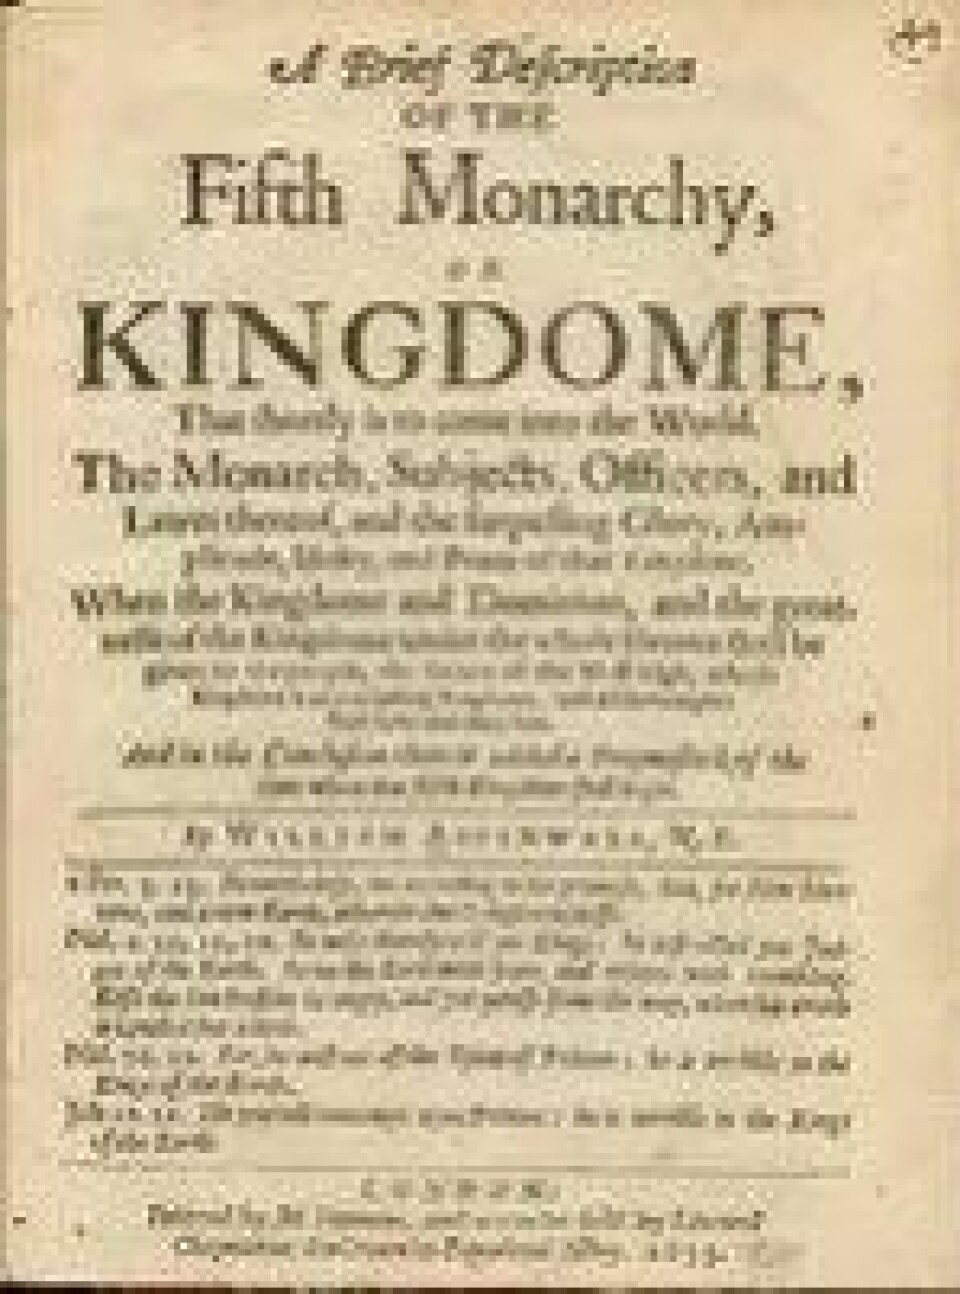 Tittelbladet på A Brief description of the Fifth Monarchy or Kingdome (1653) av William Aspinwall. (Kilde: Wikimedia Commons)